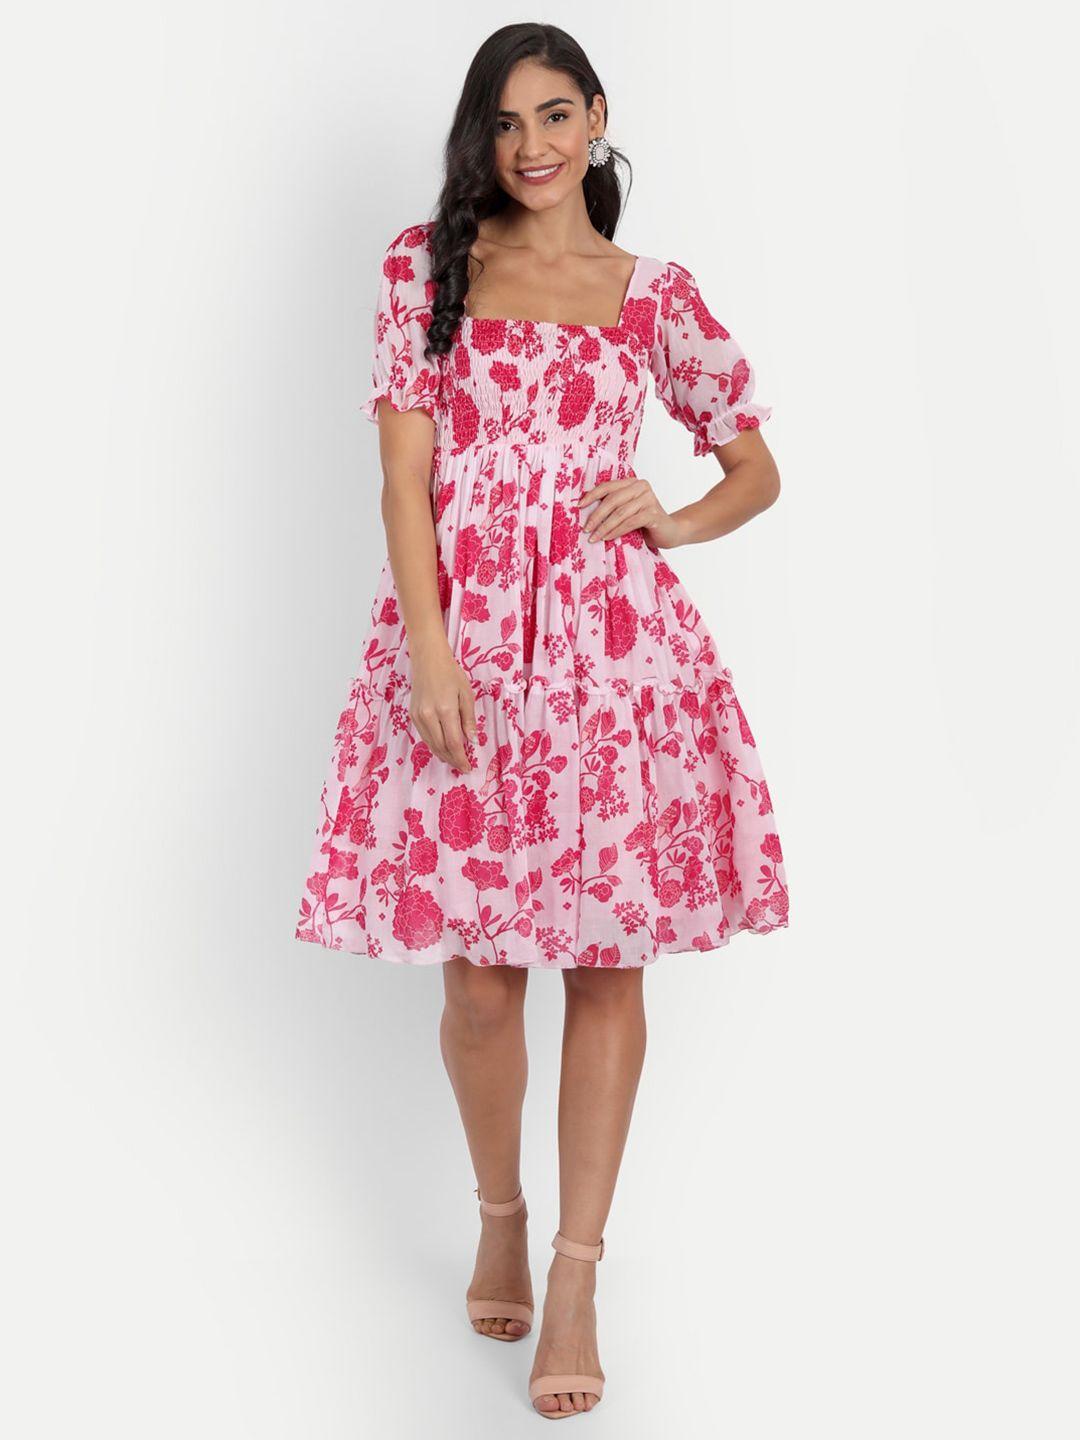 kapasriti pink floral dress